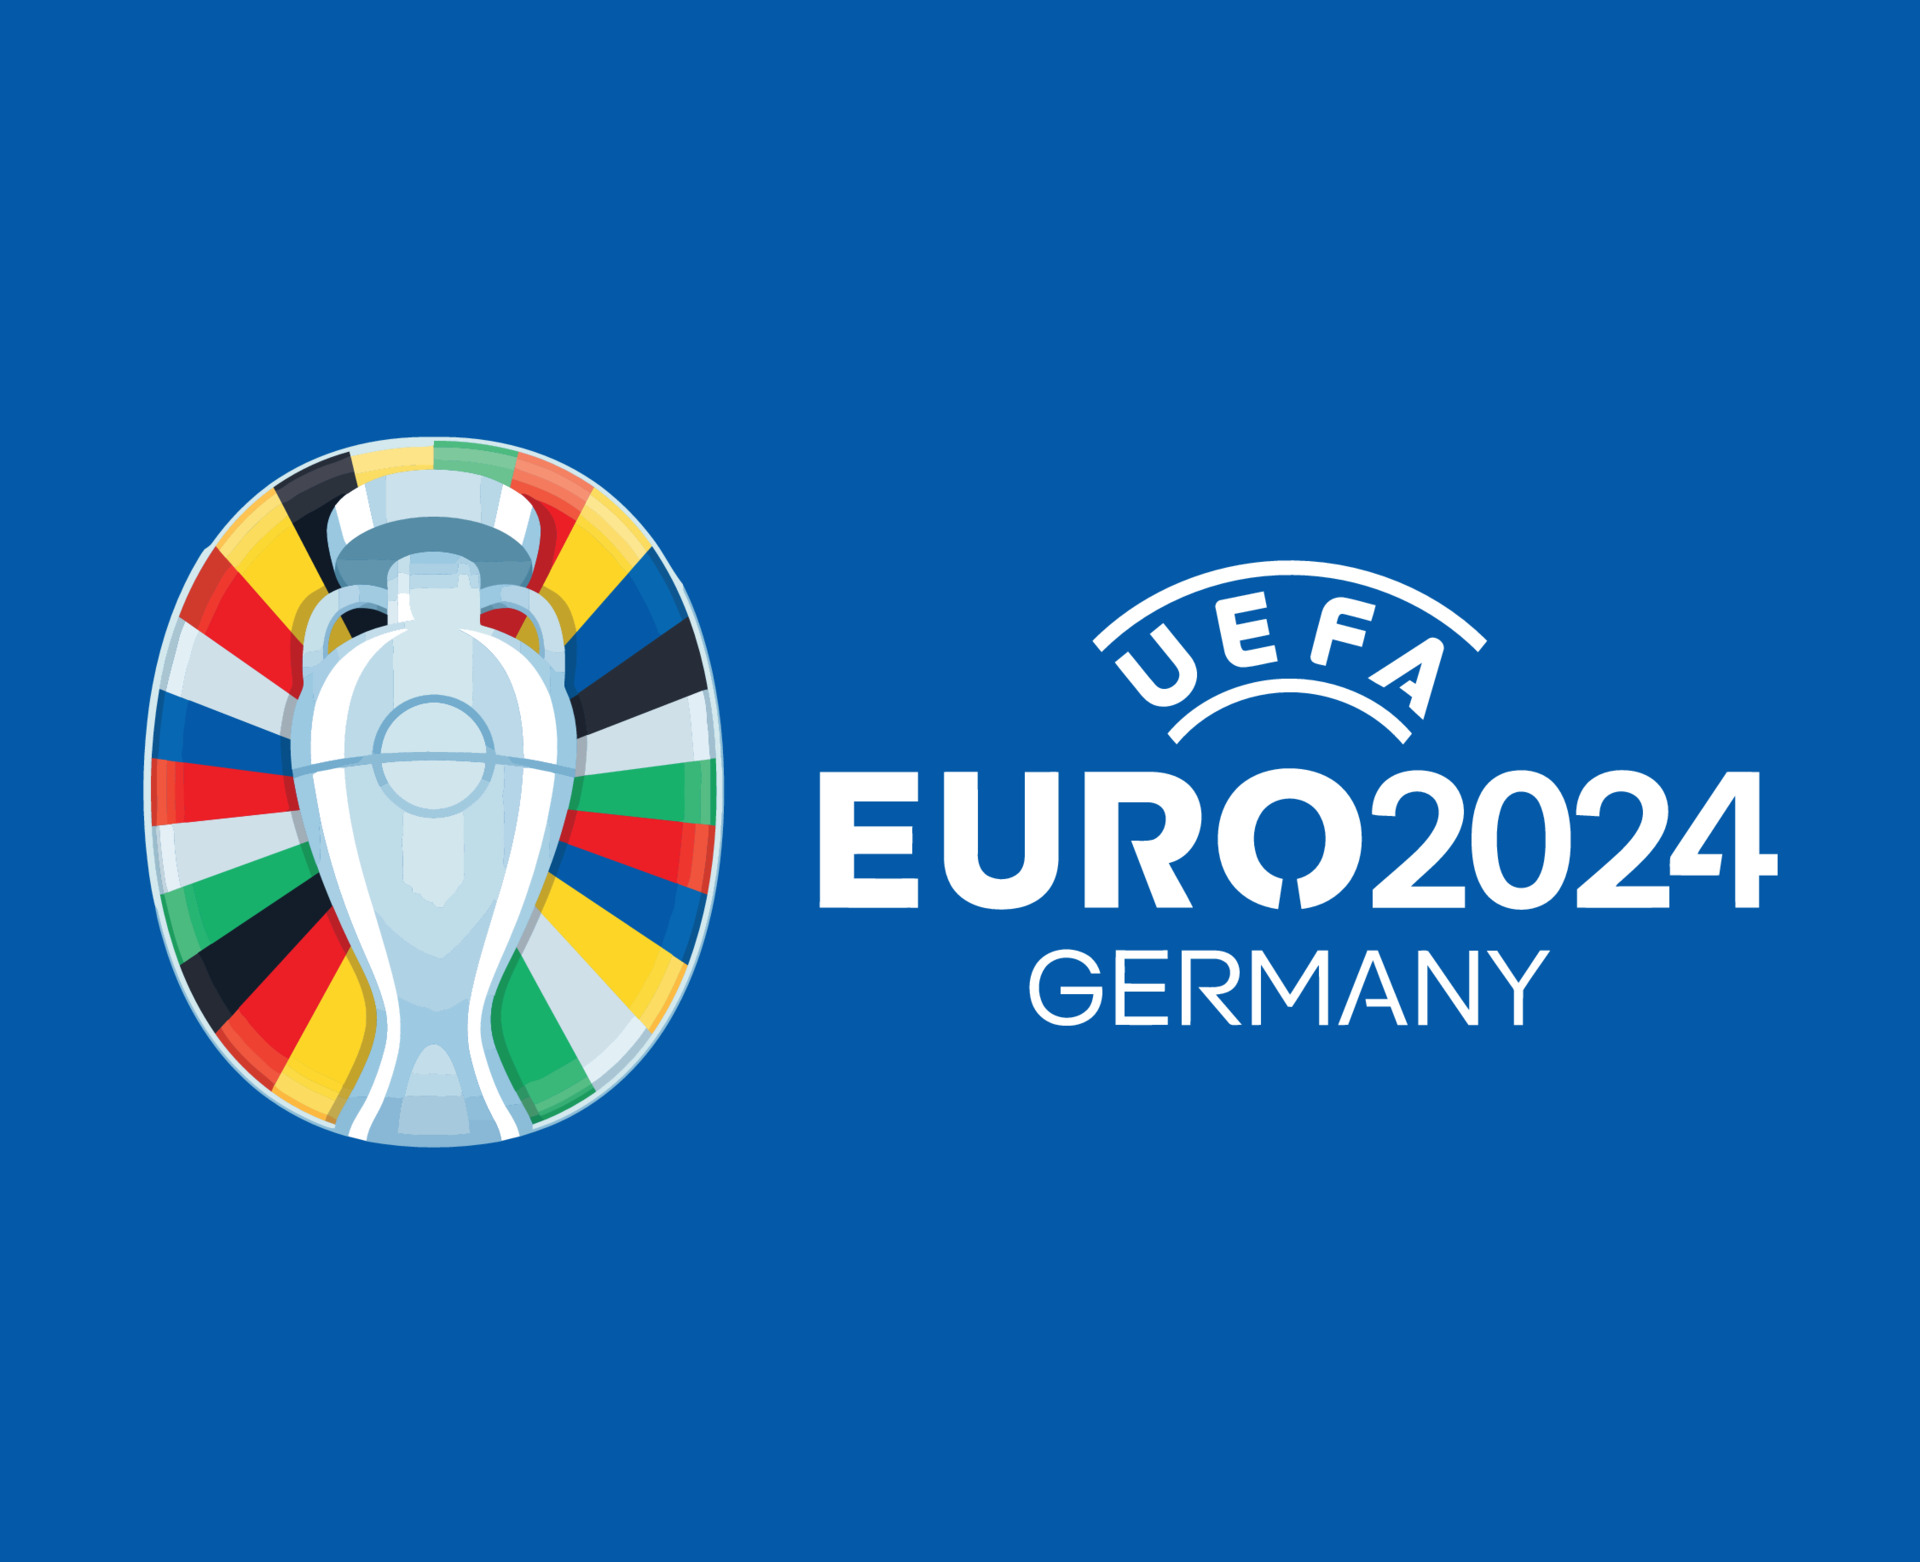 vecteezy_euro-2024-germany-official-logo-with-name-symbol-european_22700816